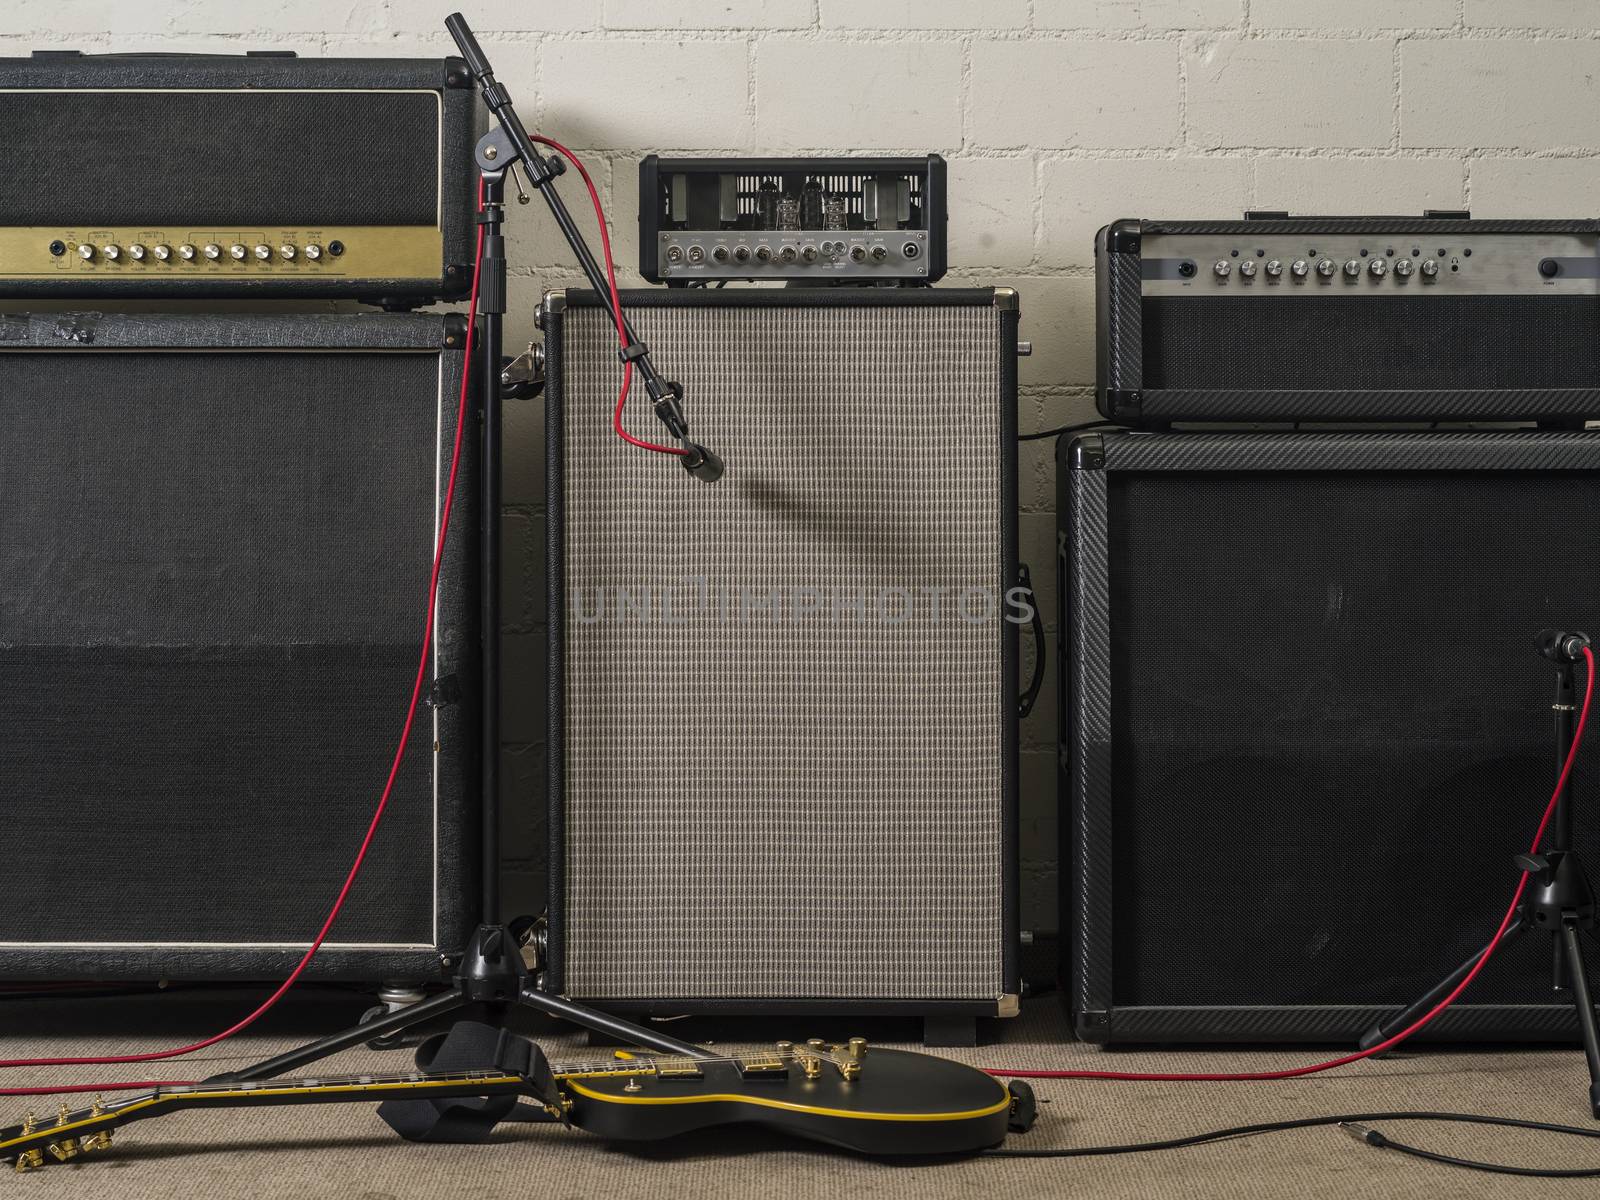 Guitar amplifiers in recording studio by sumners